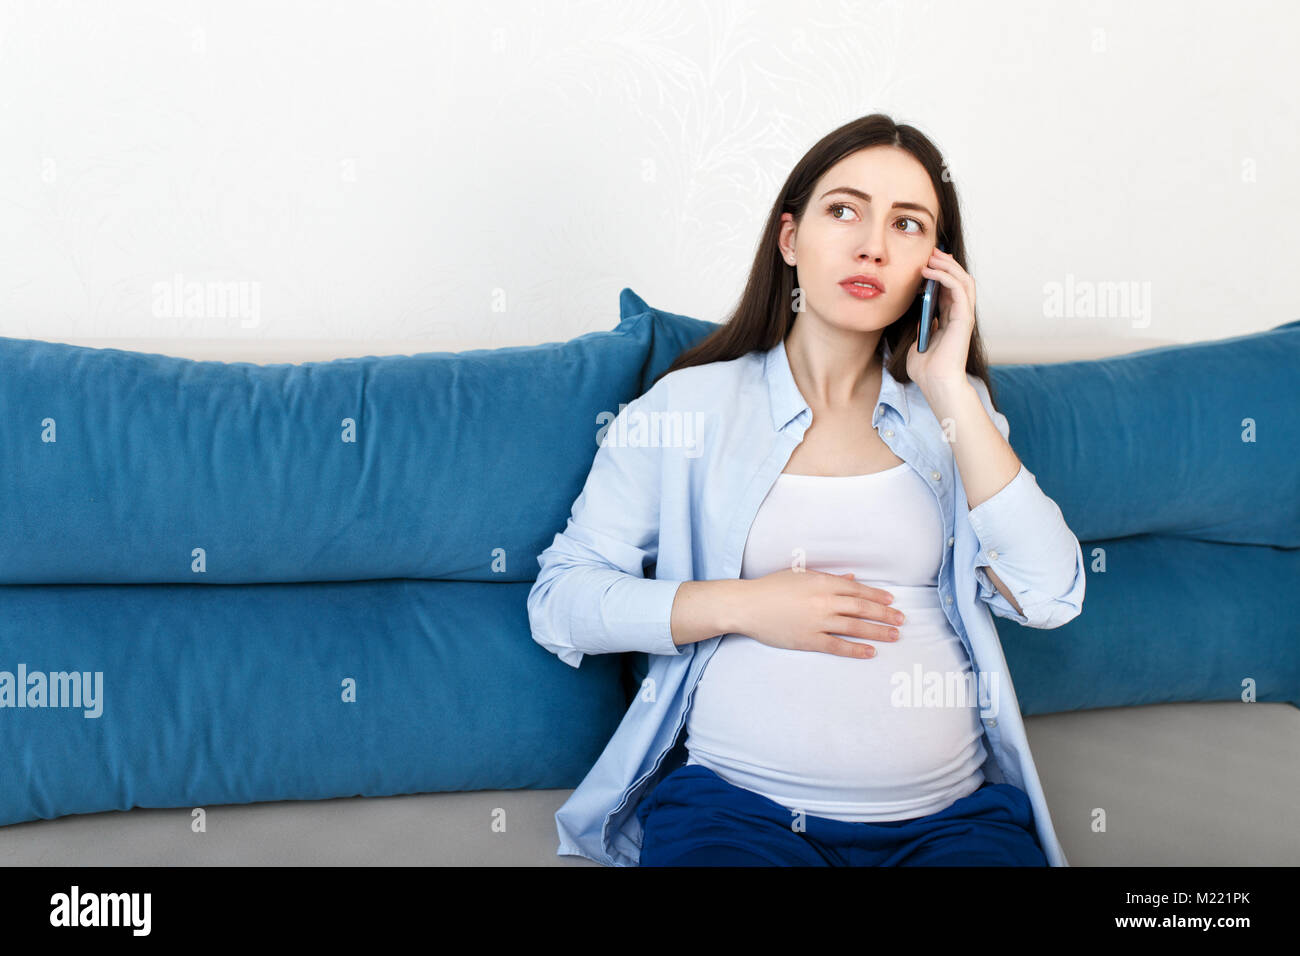 pregnant woman talking on phone Stock Photo